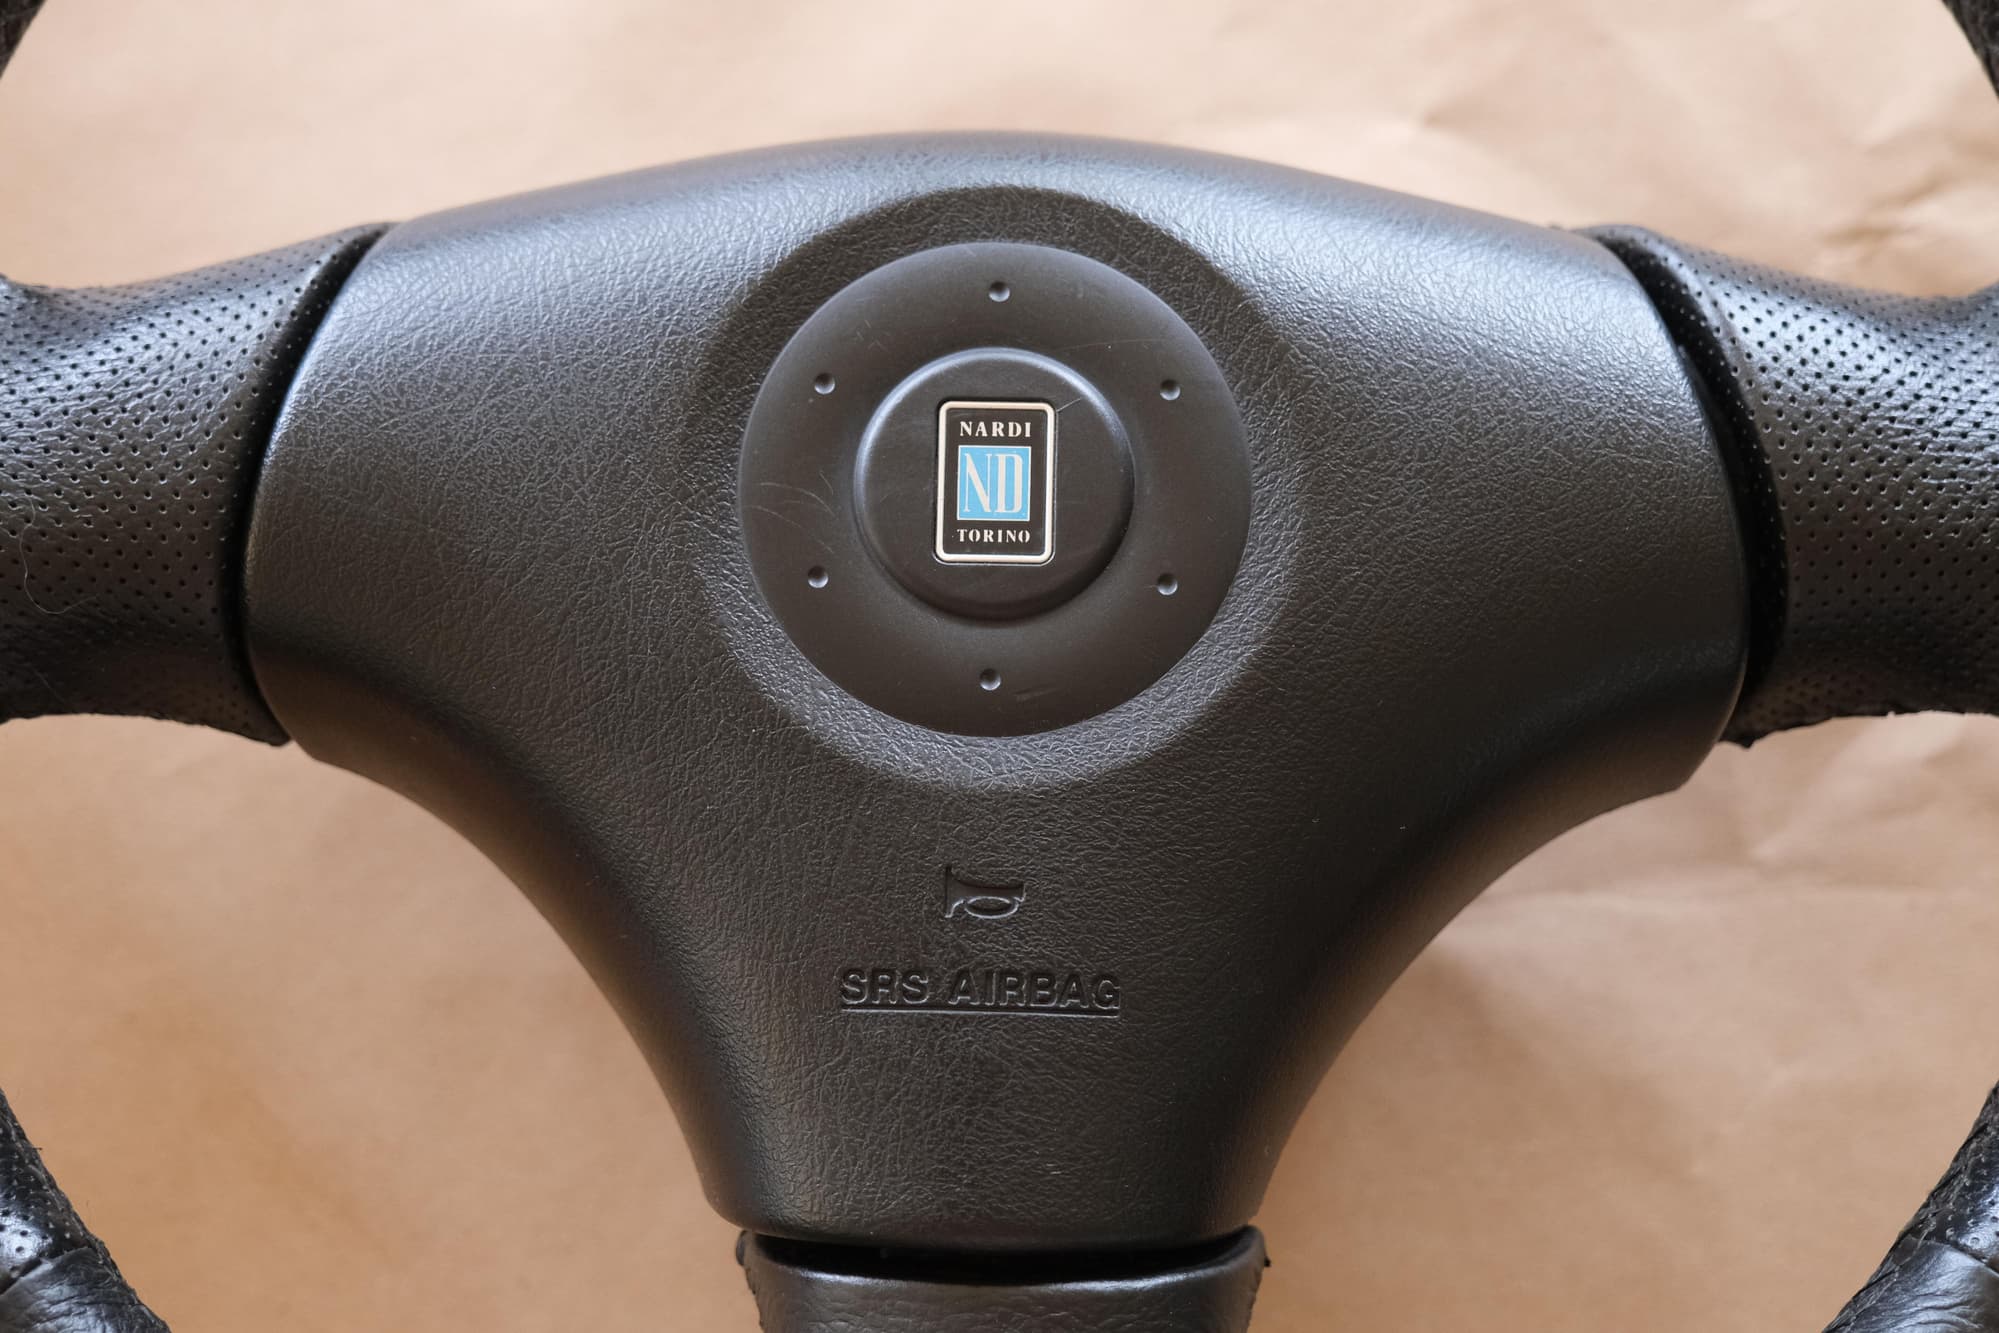 Interior/Upholstery - Miata NB steering wheel for FD - Used - 1993 to 1995 Mazda RX-7 - Santa Cruz, CA 95060, United States